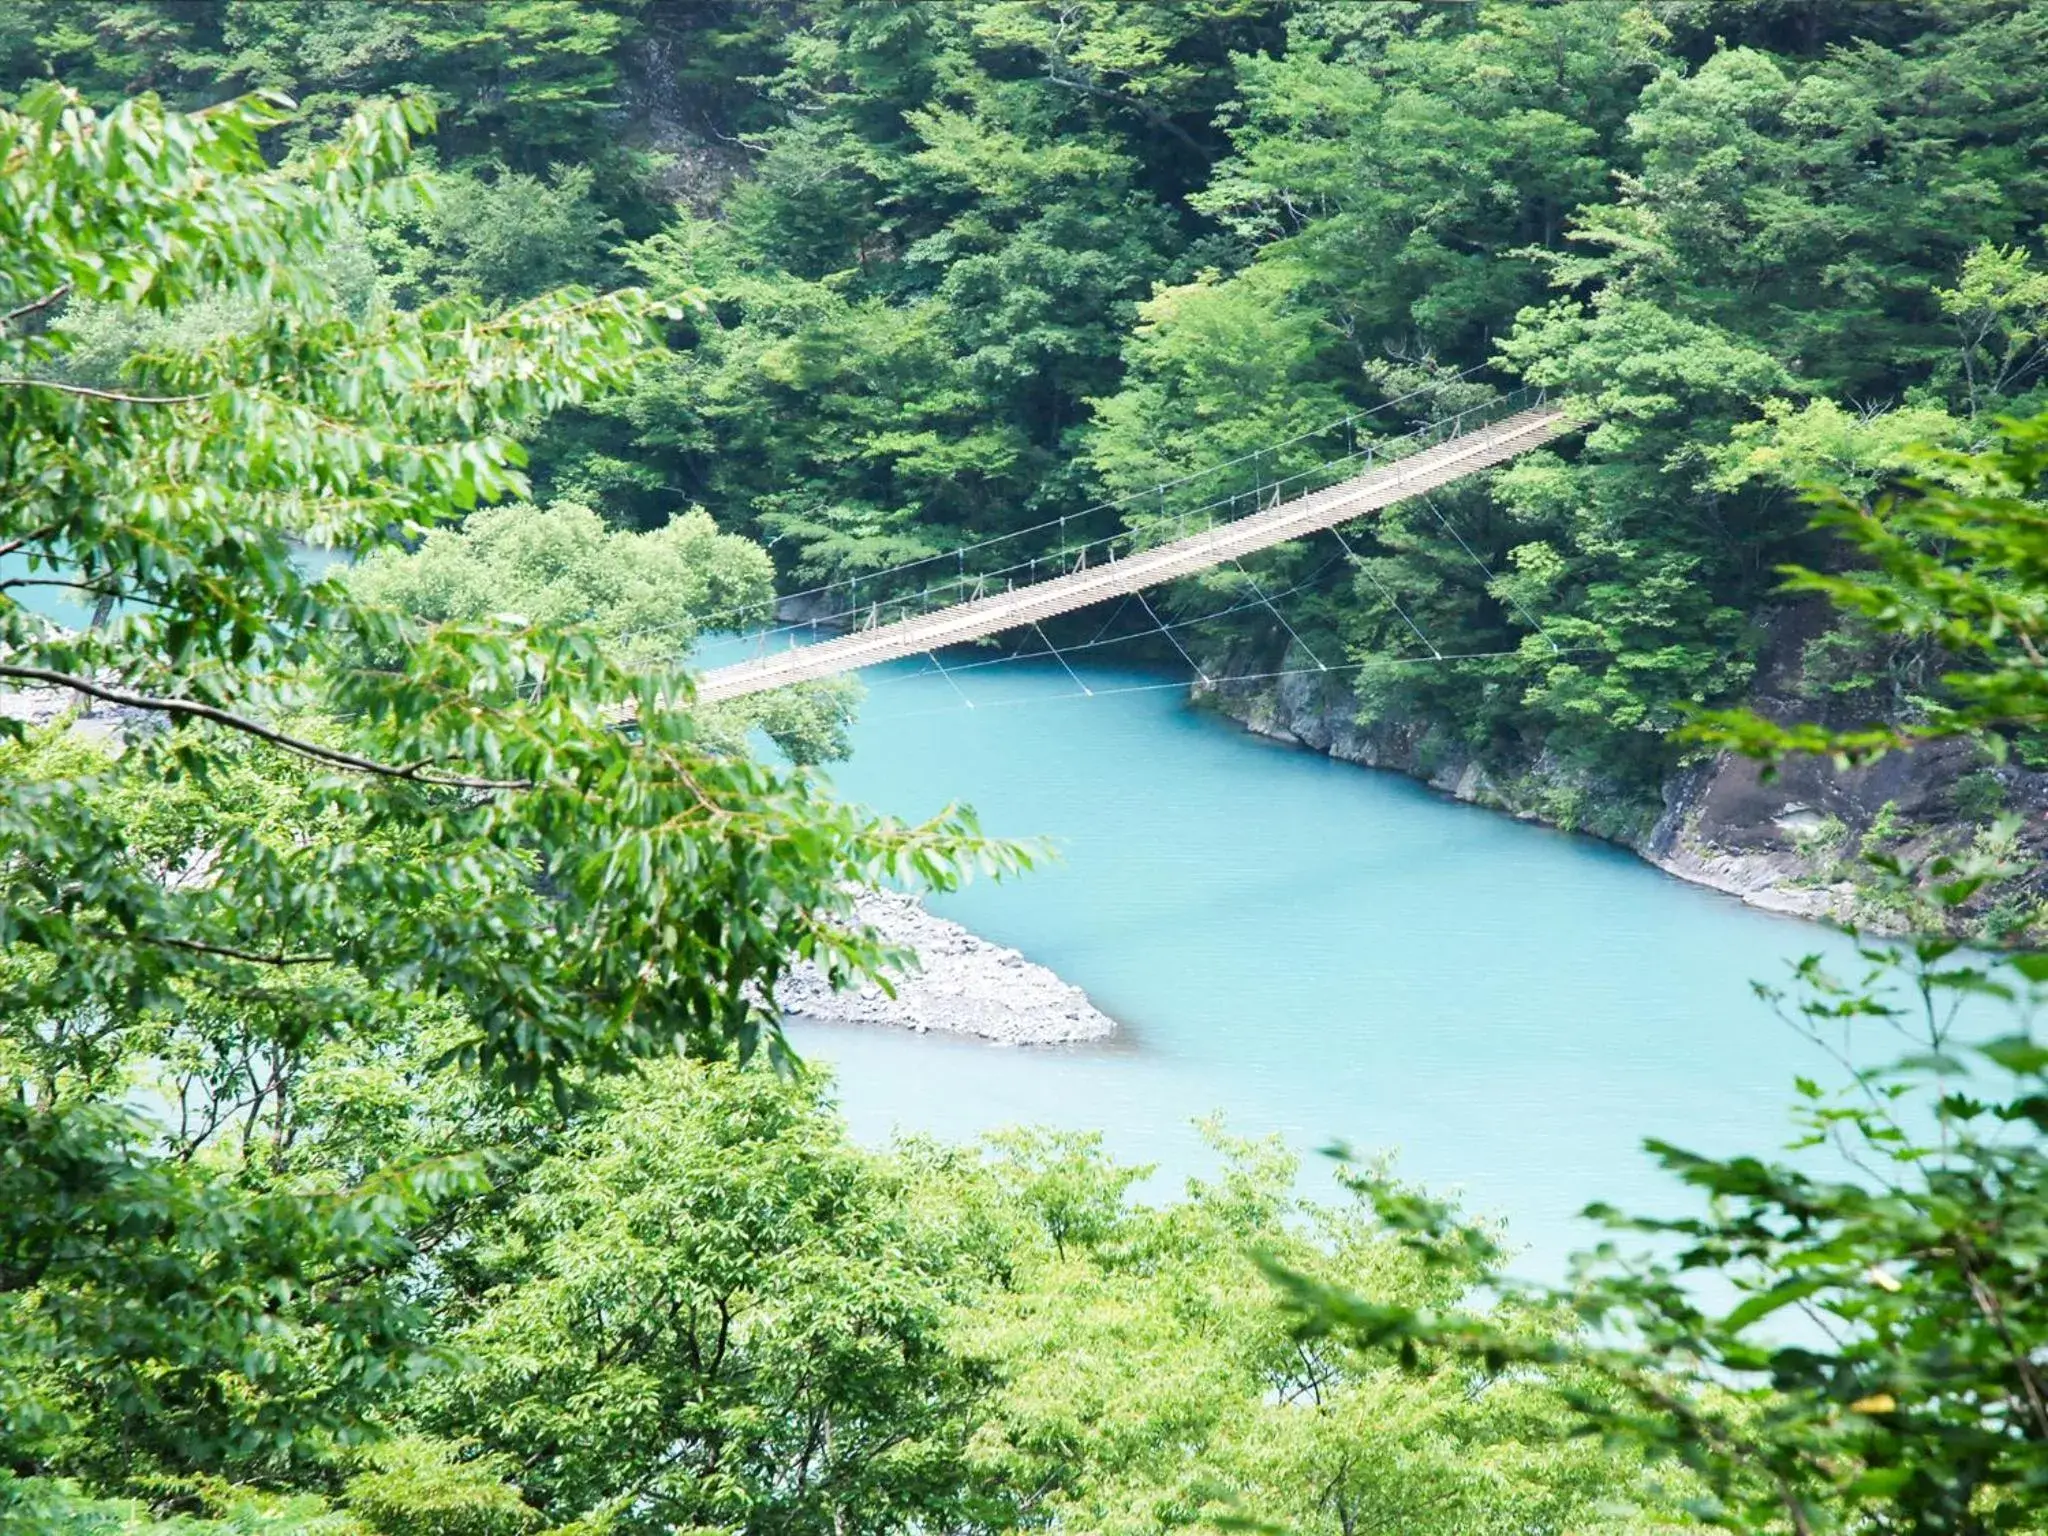 Nearby landmark, Natural Landscape in Suikoen Ryokan